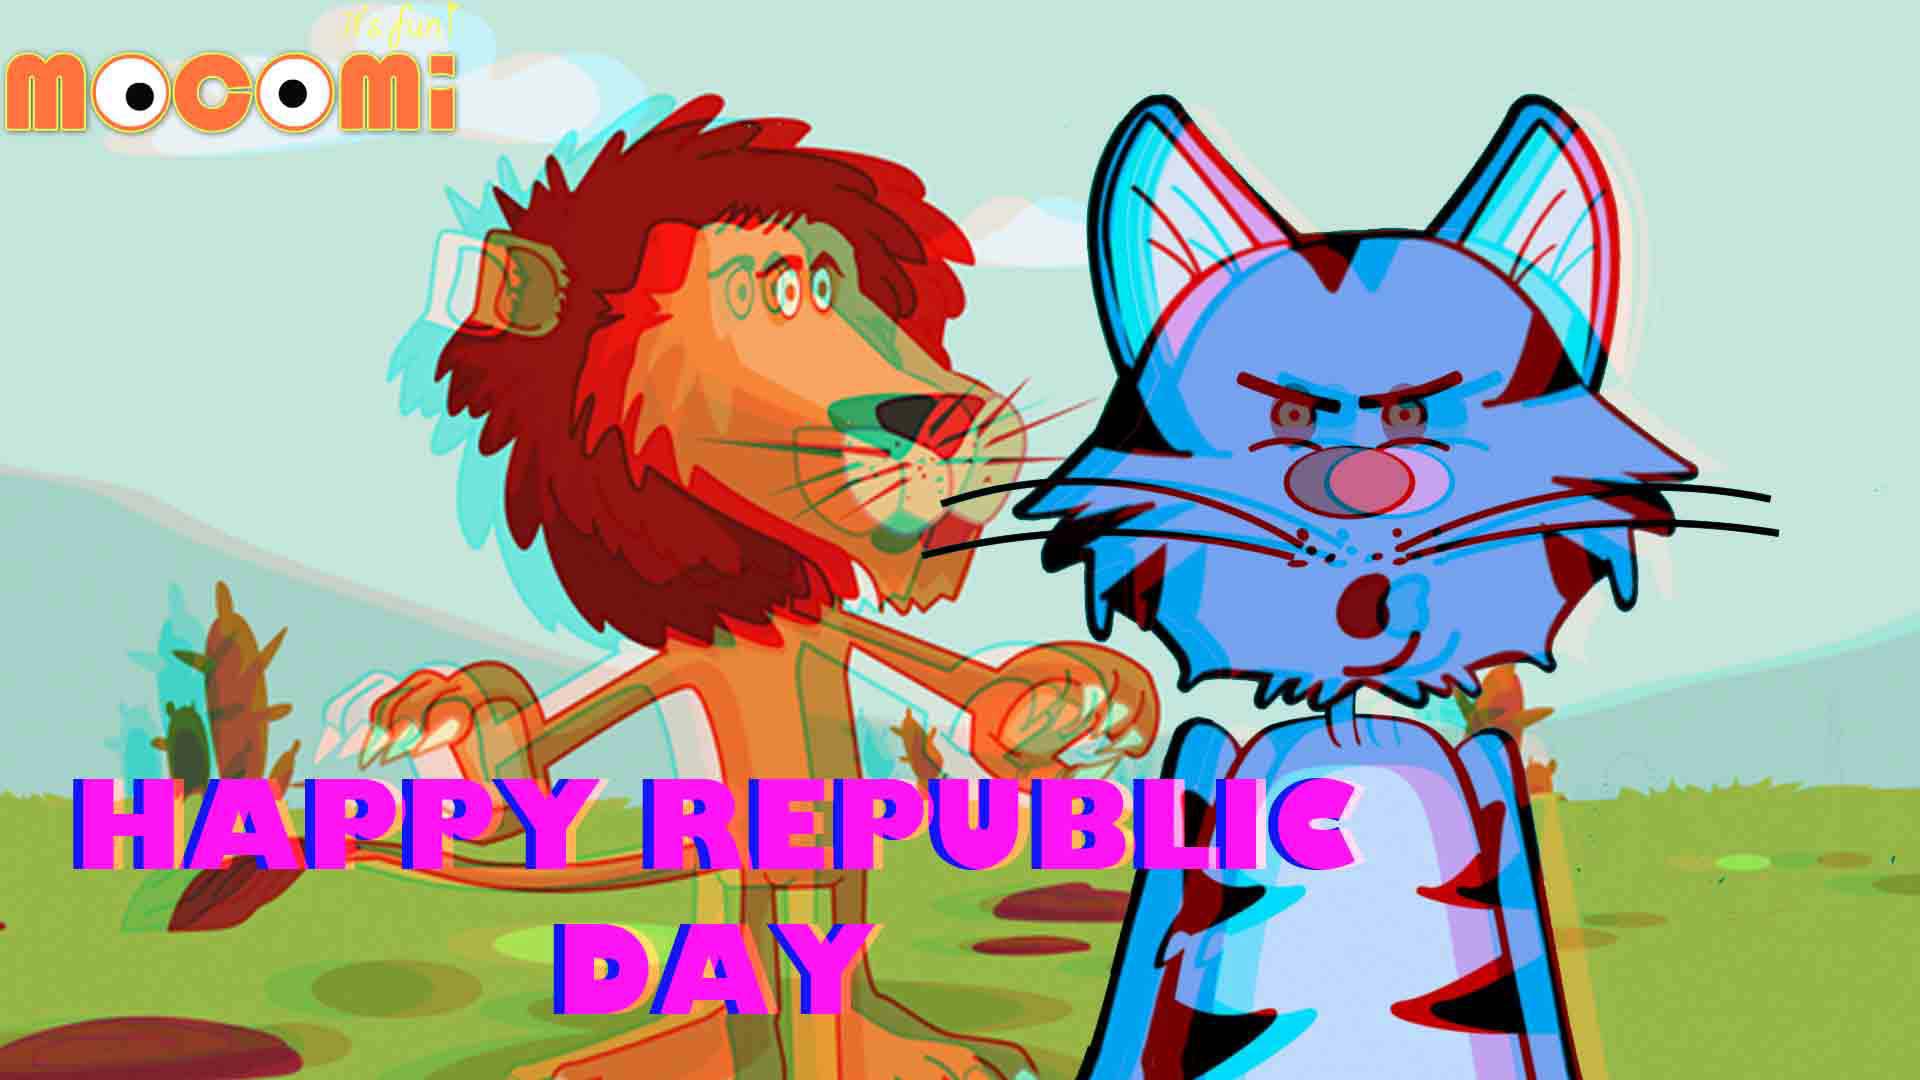 Tina the cat says Happy Republic Day